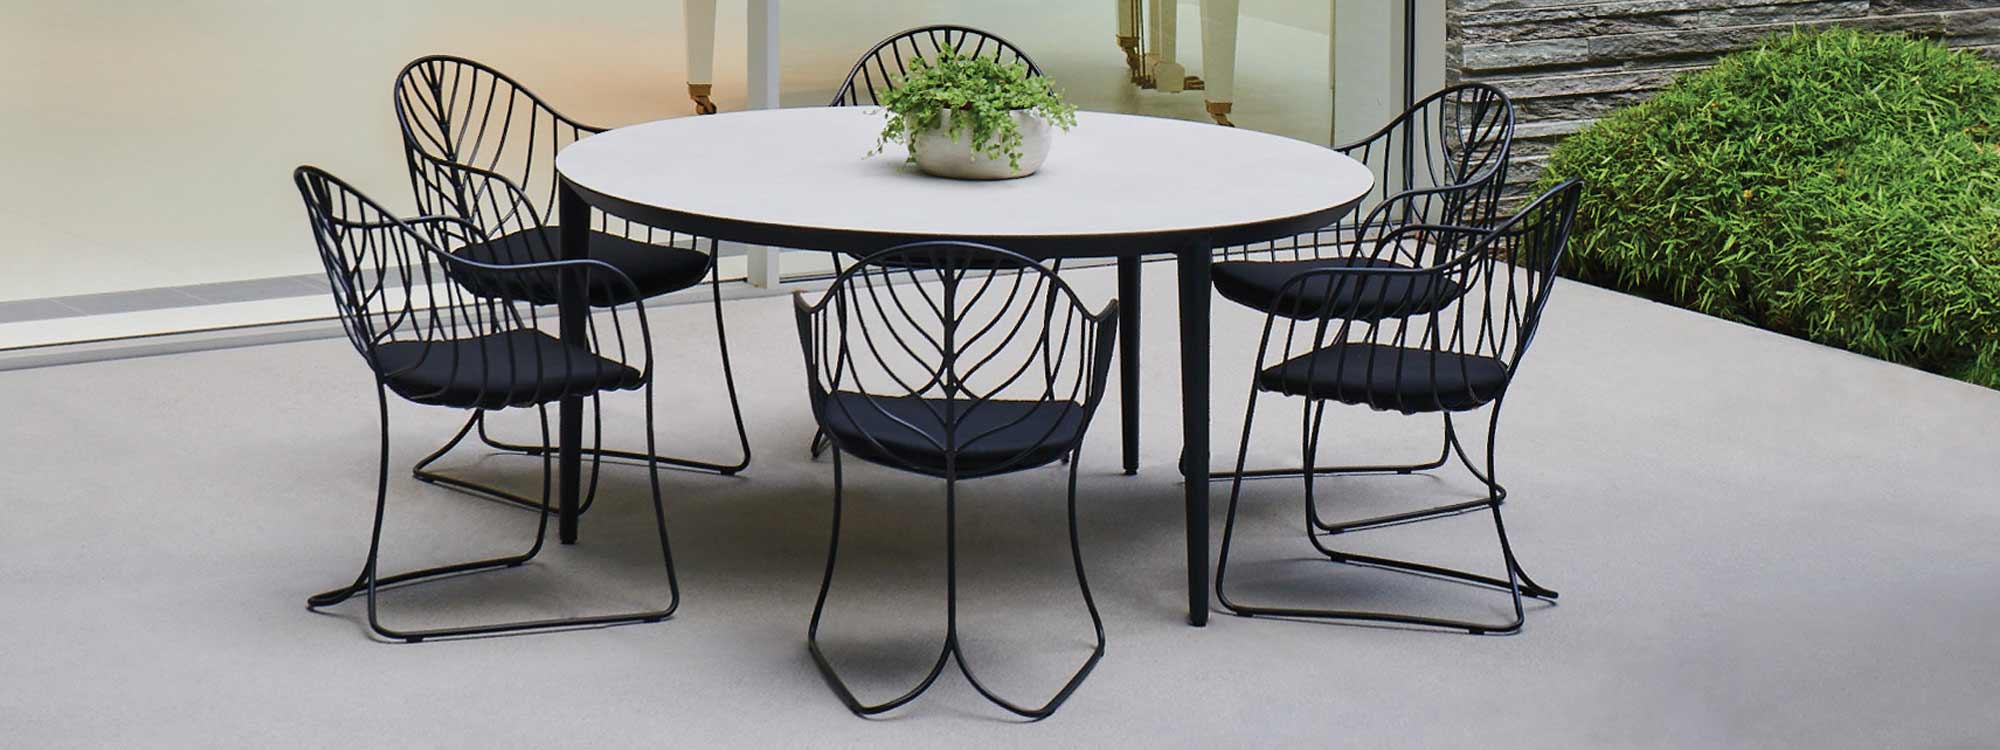 Image of Folia chair & U-nite circular garden table by Royal Botania